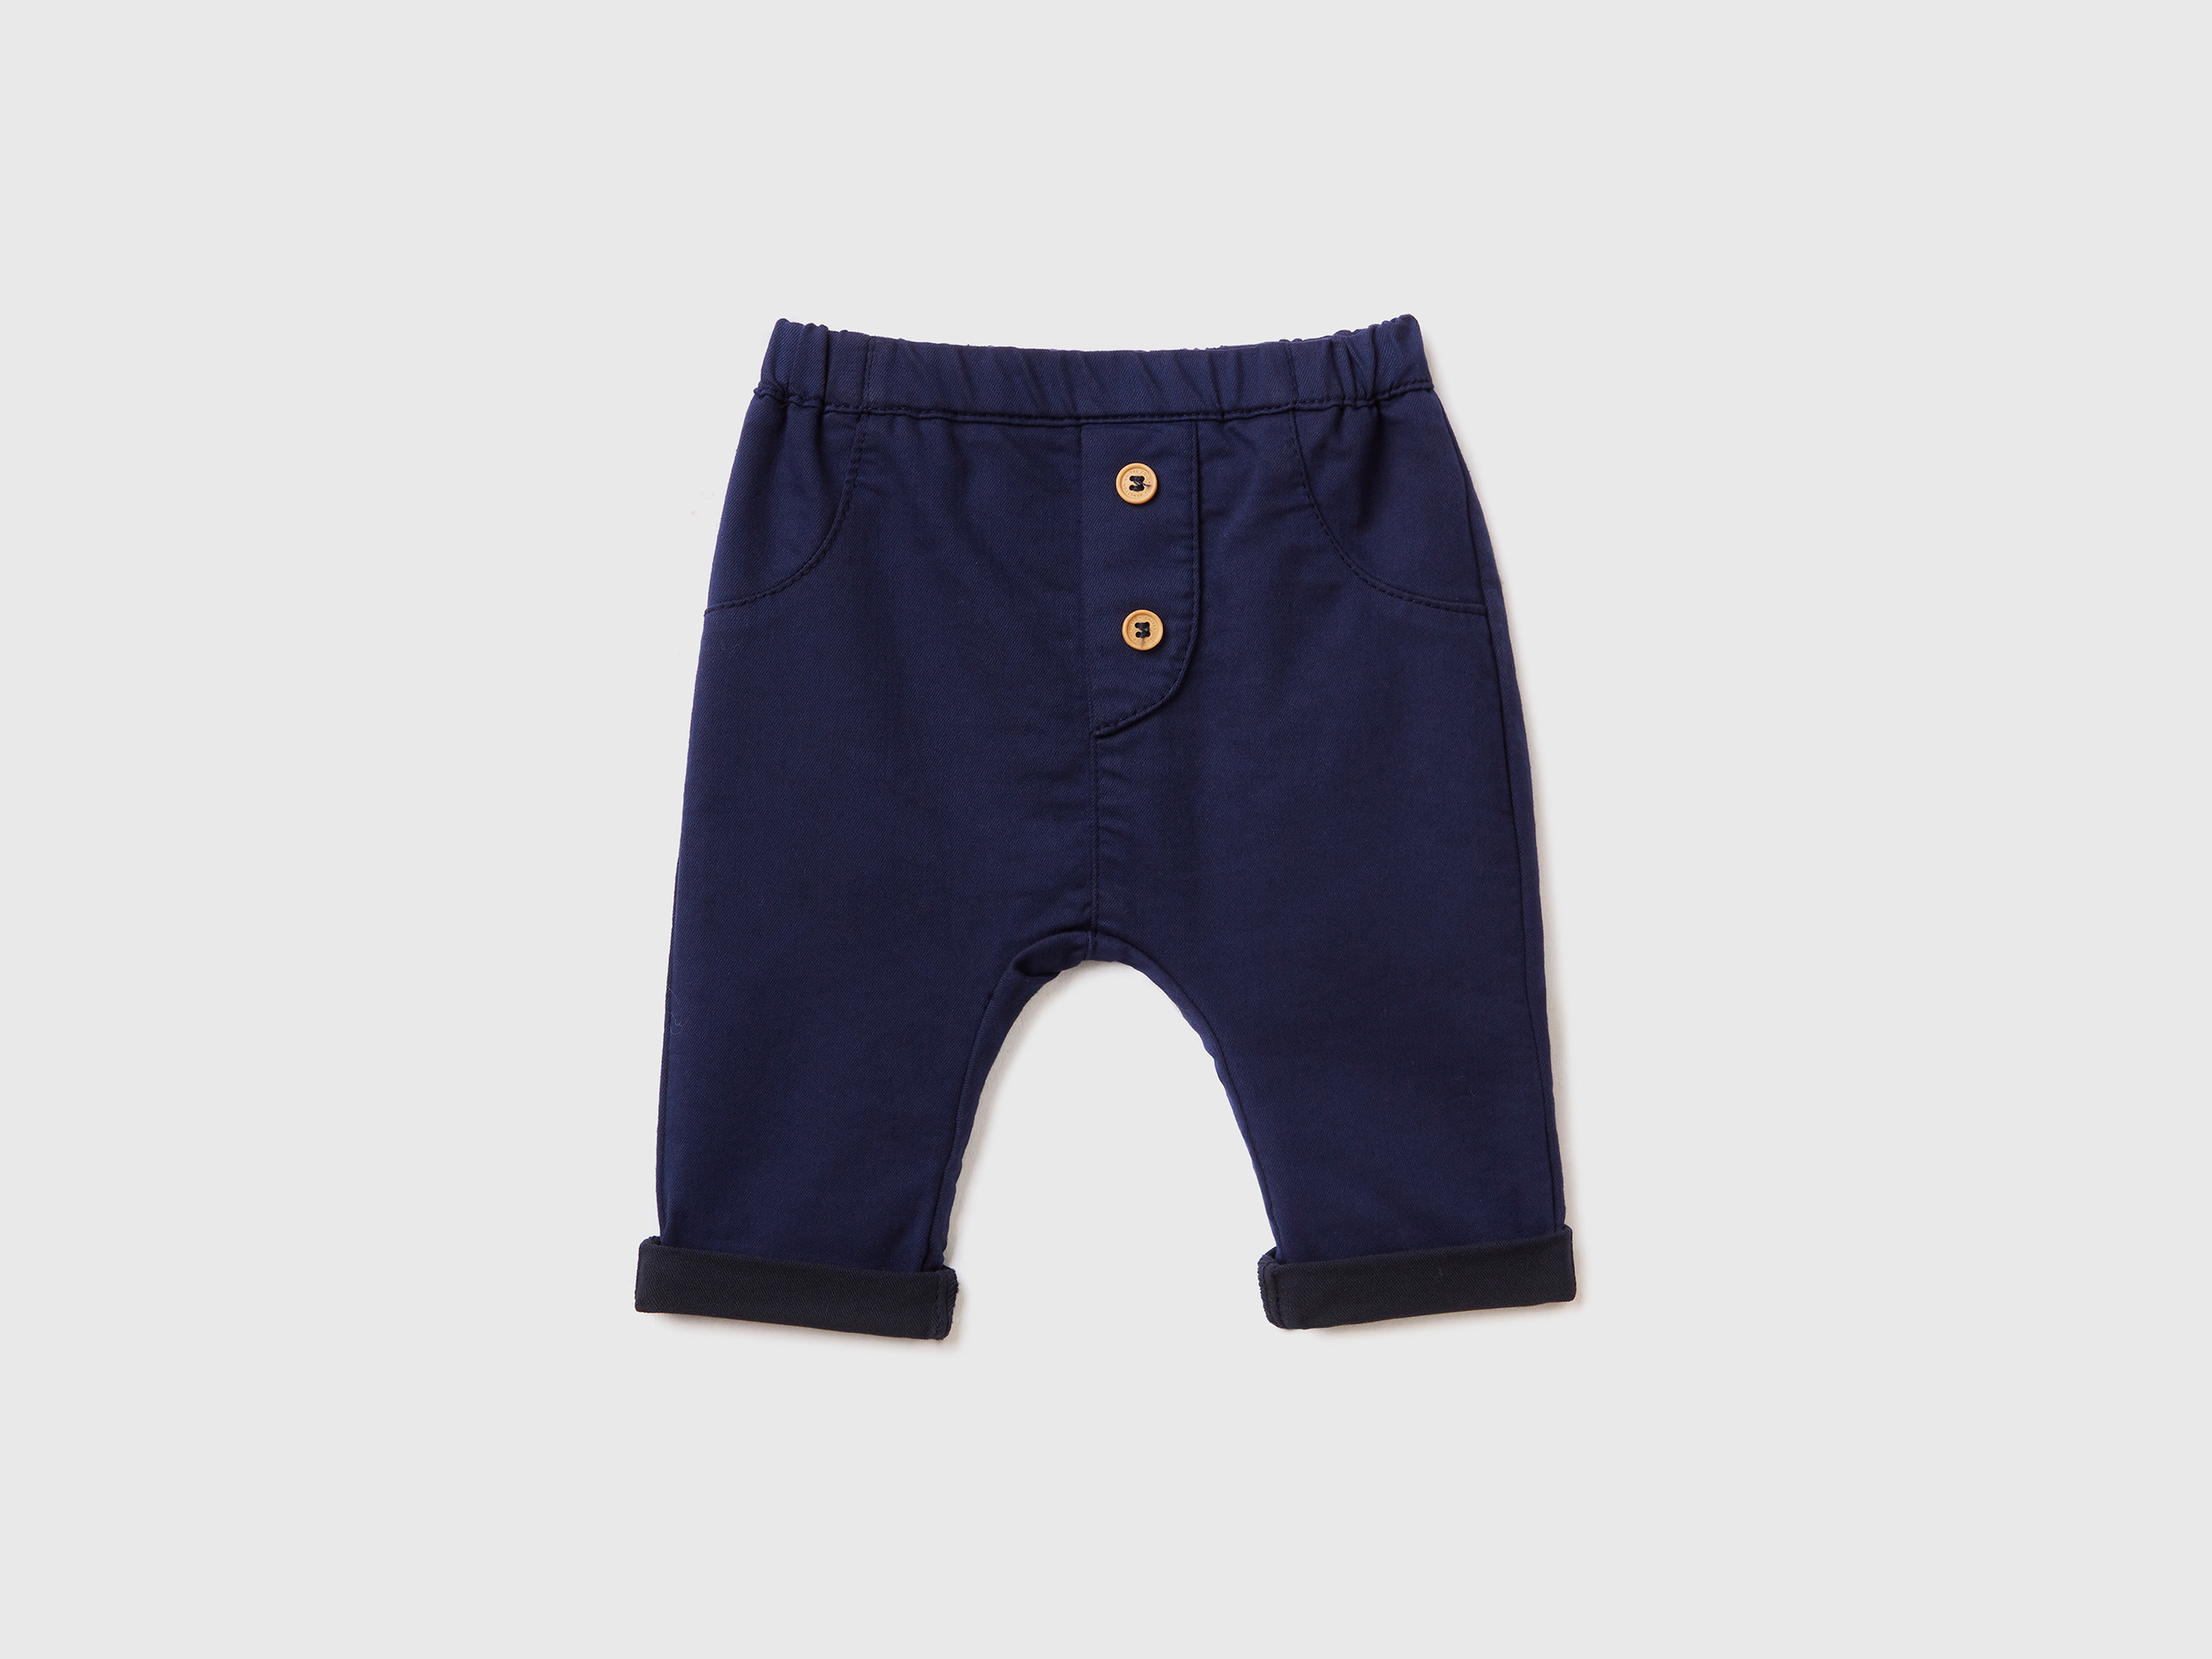 Benetton, Trousers In Stretch Cotton Blend, size 6-9, Dark Blue, Kids